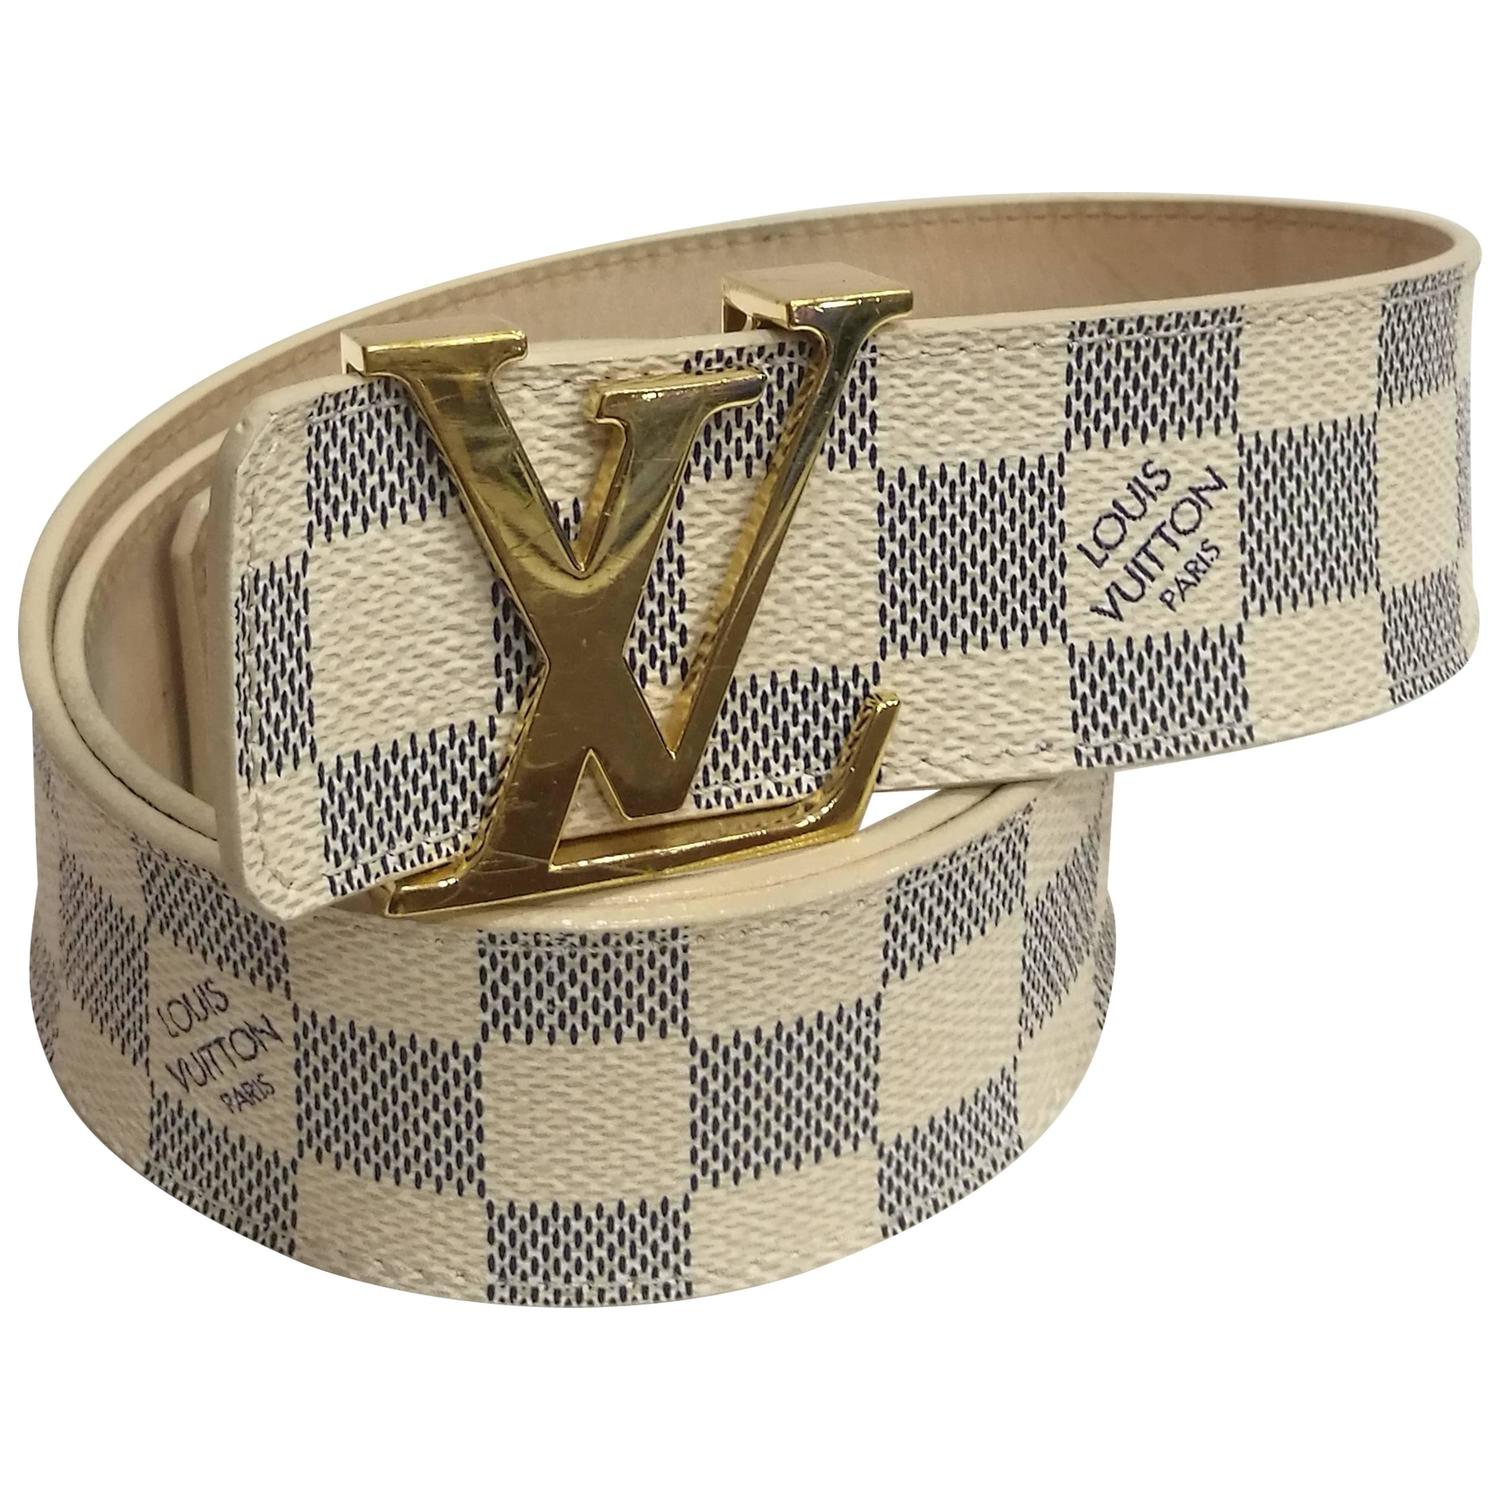 Louis Vuitton Damier Belt For Sale at 1stdibs